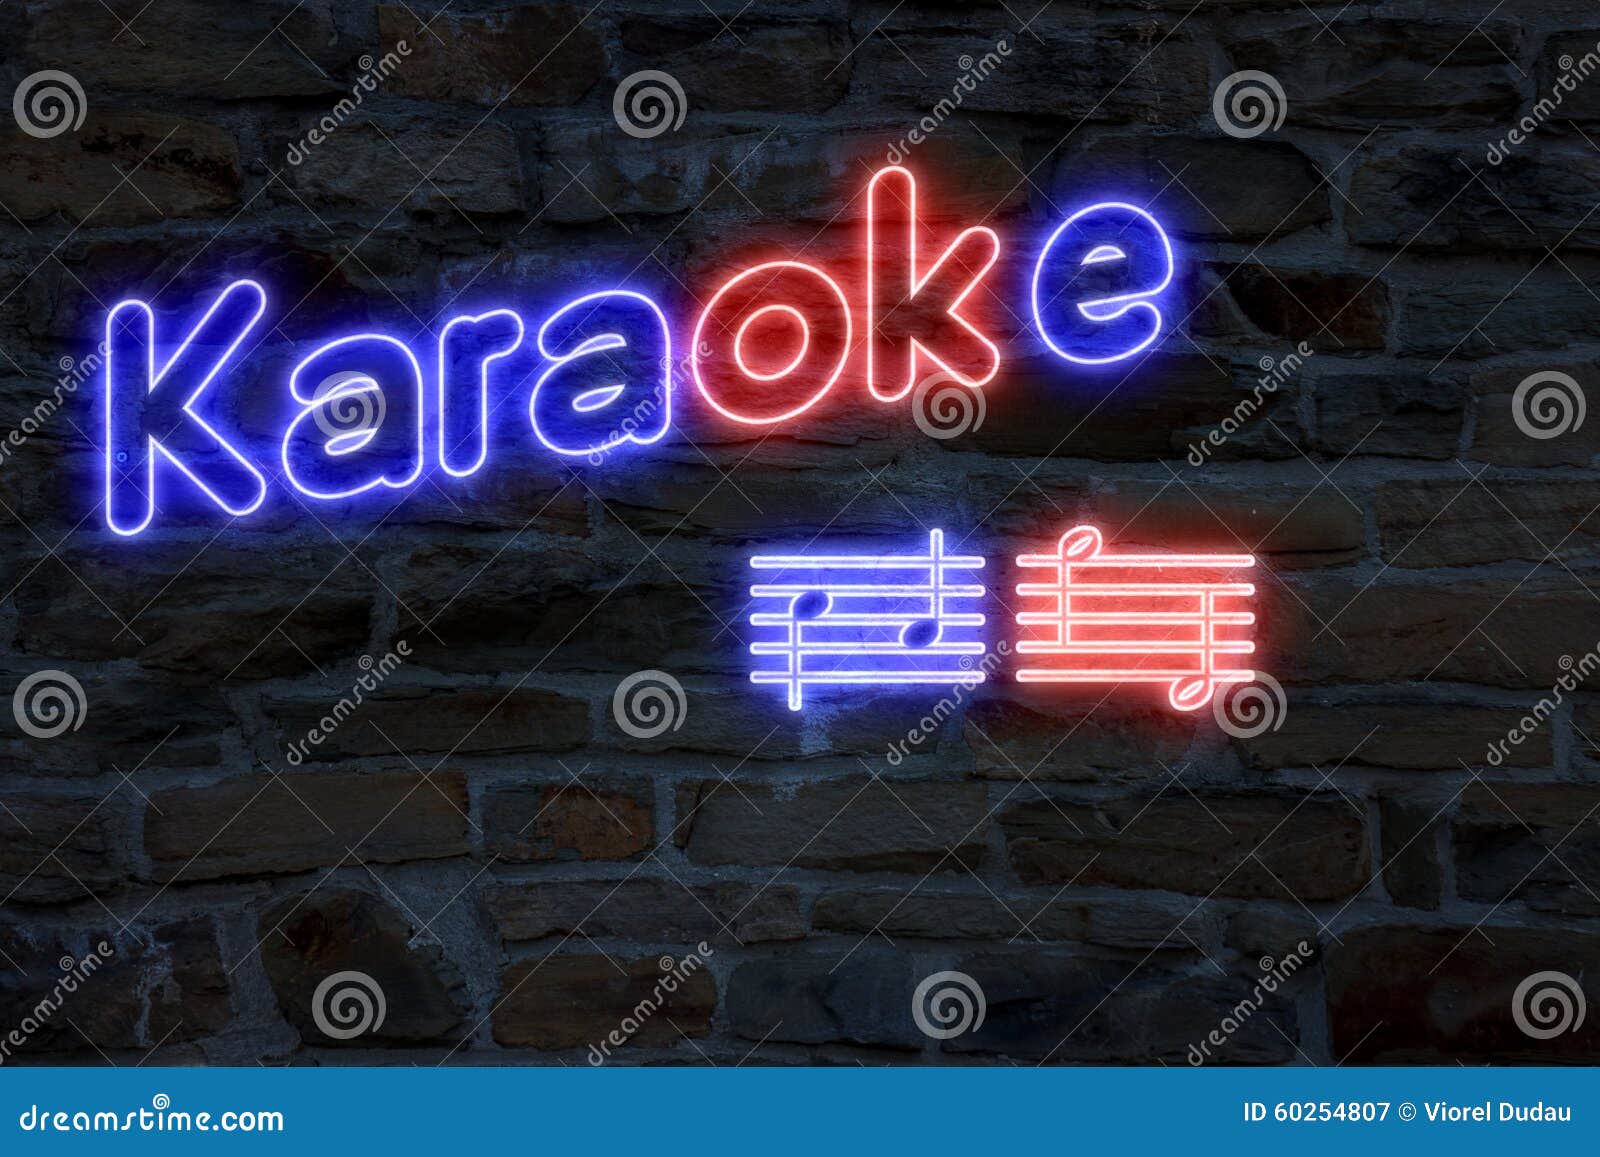 karaoke venue